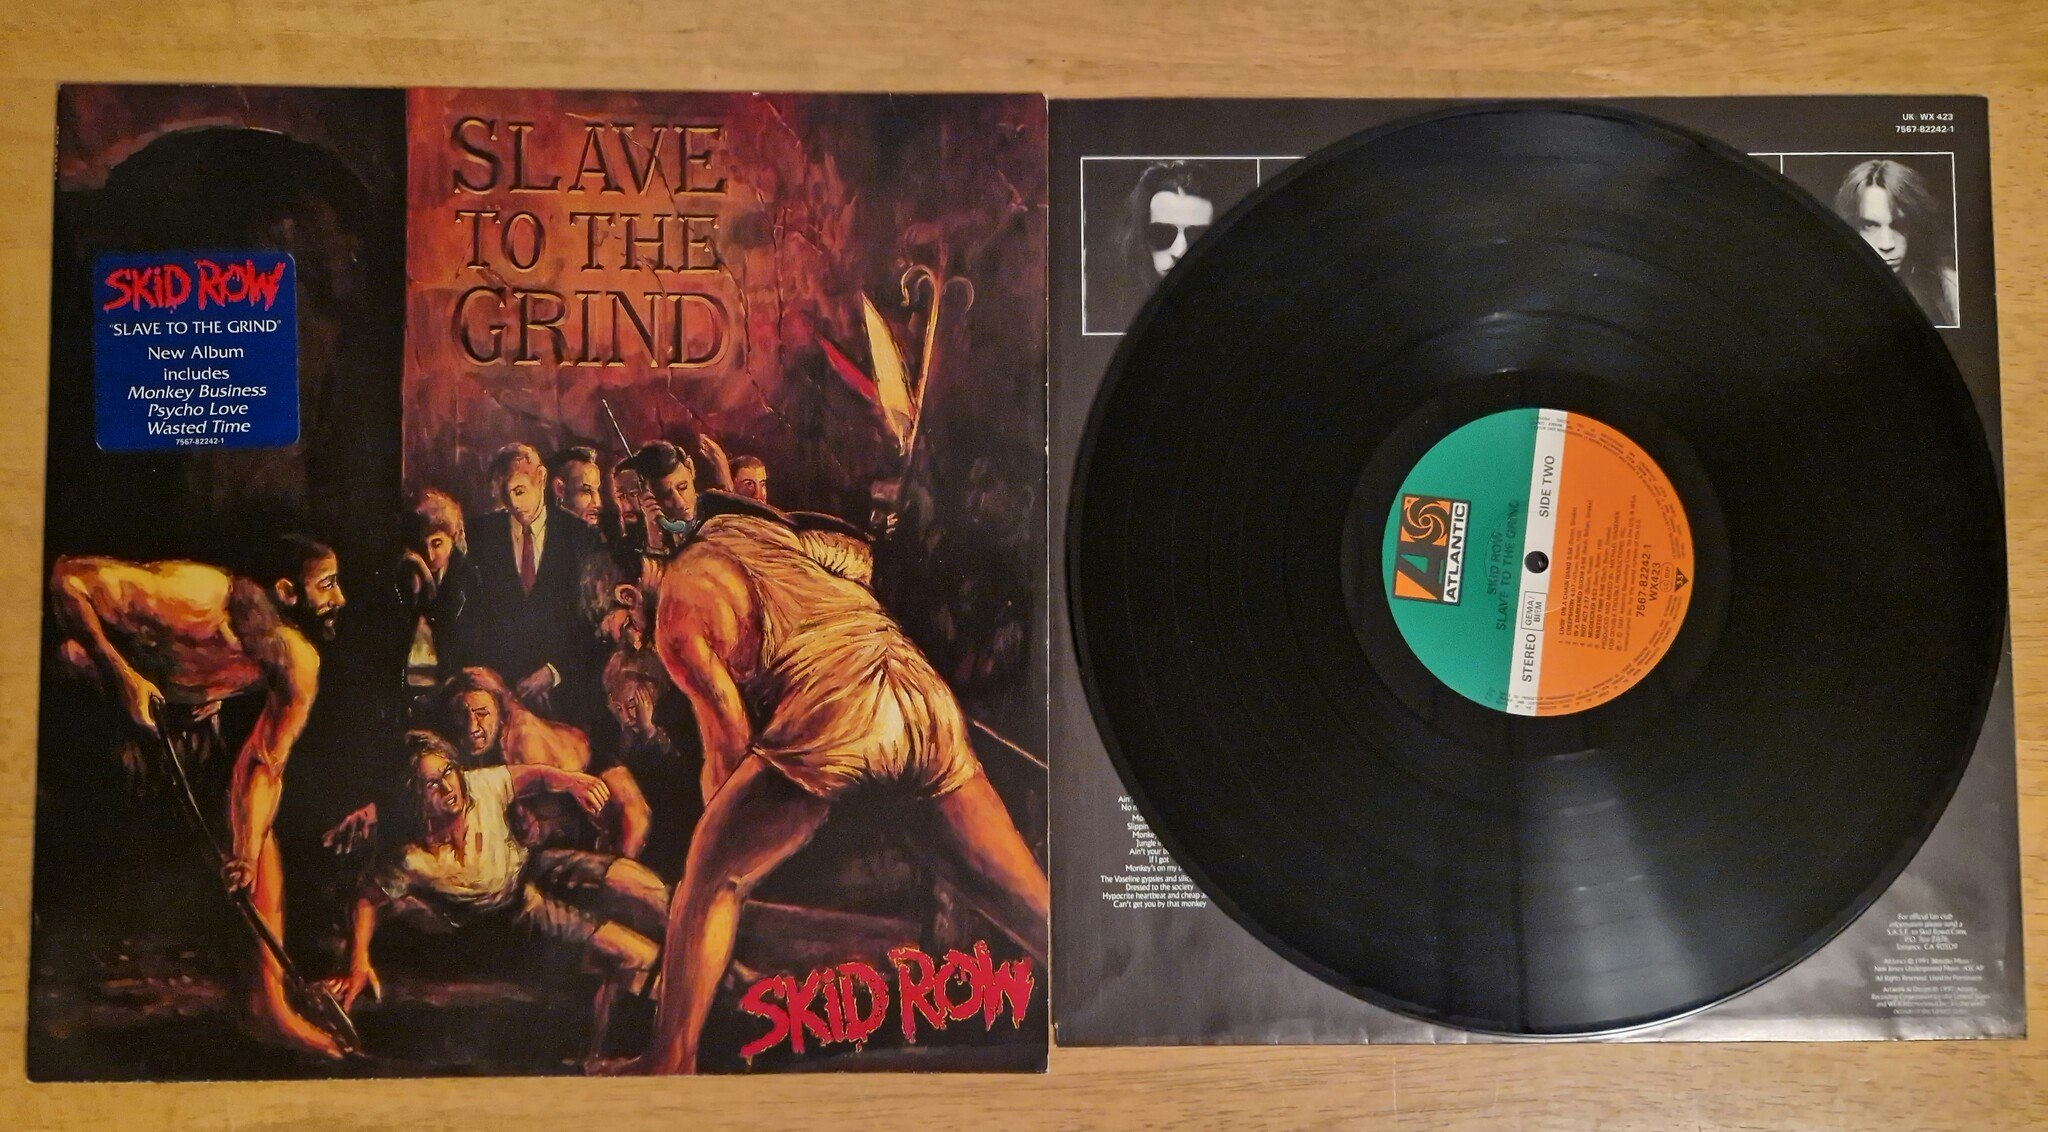 Skid Row, Slave to the grind. Vinyl LP